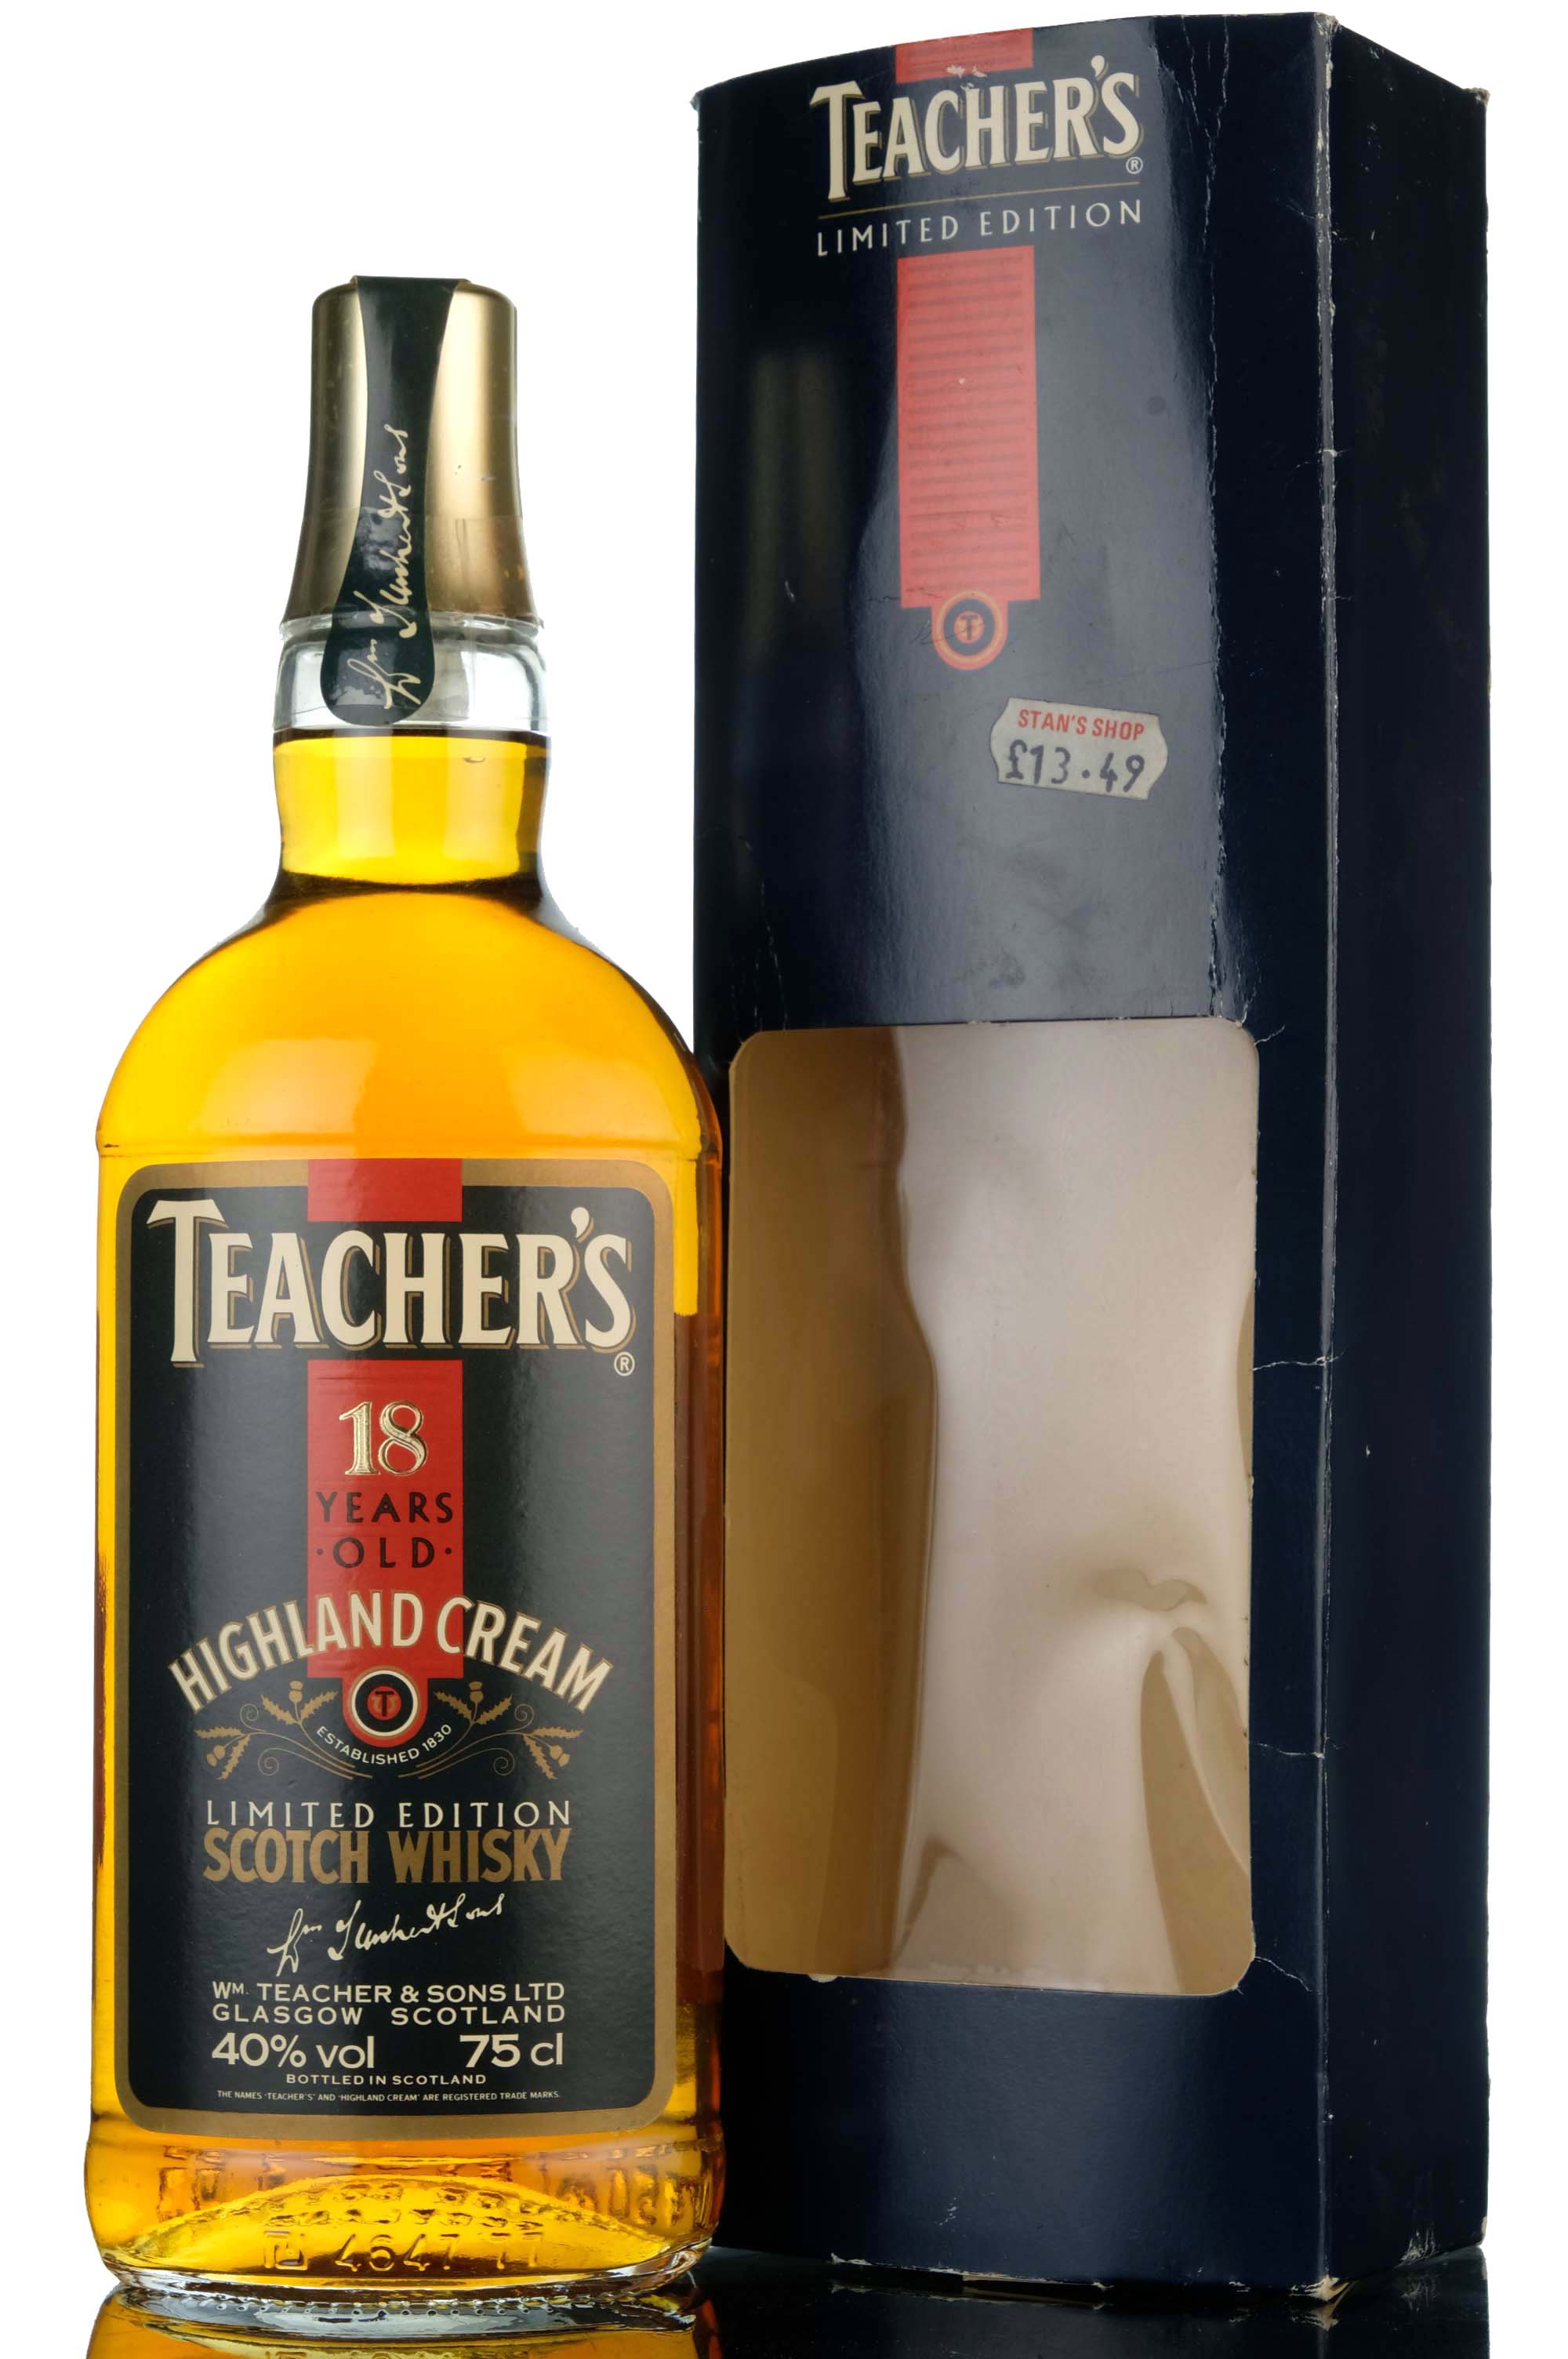 Teachers 18 Year Old - Highland Cream - Limited Edition - 1980s